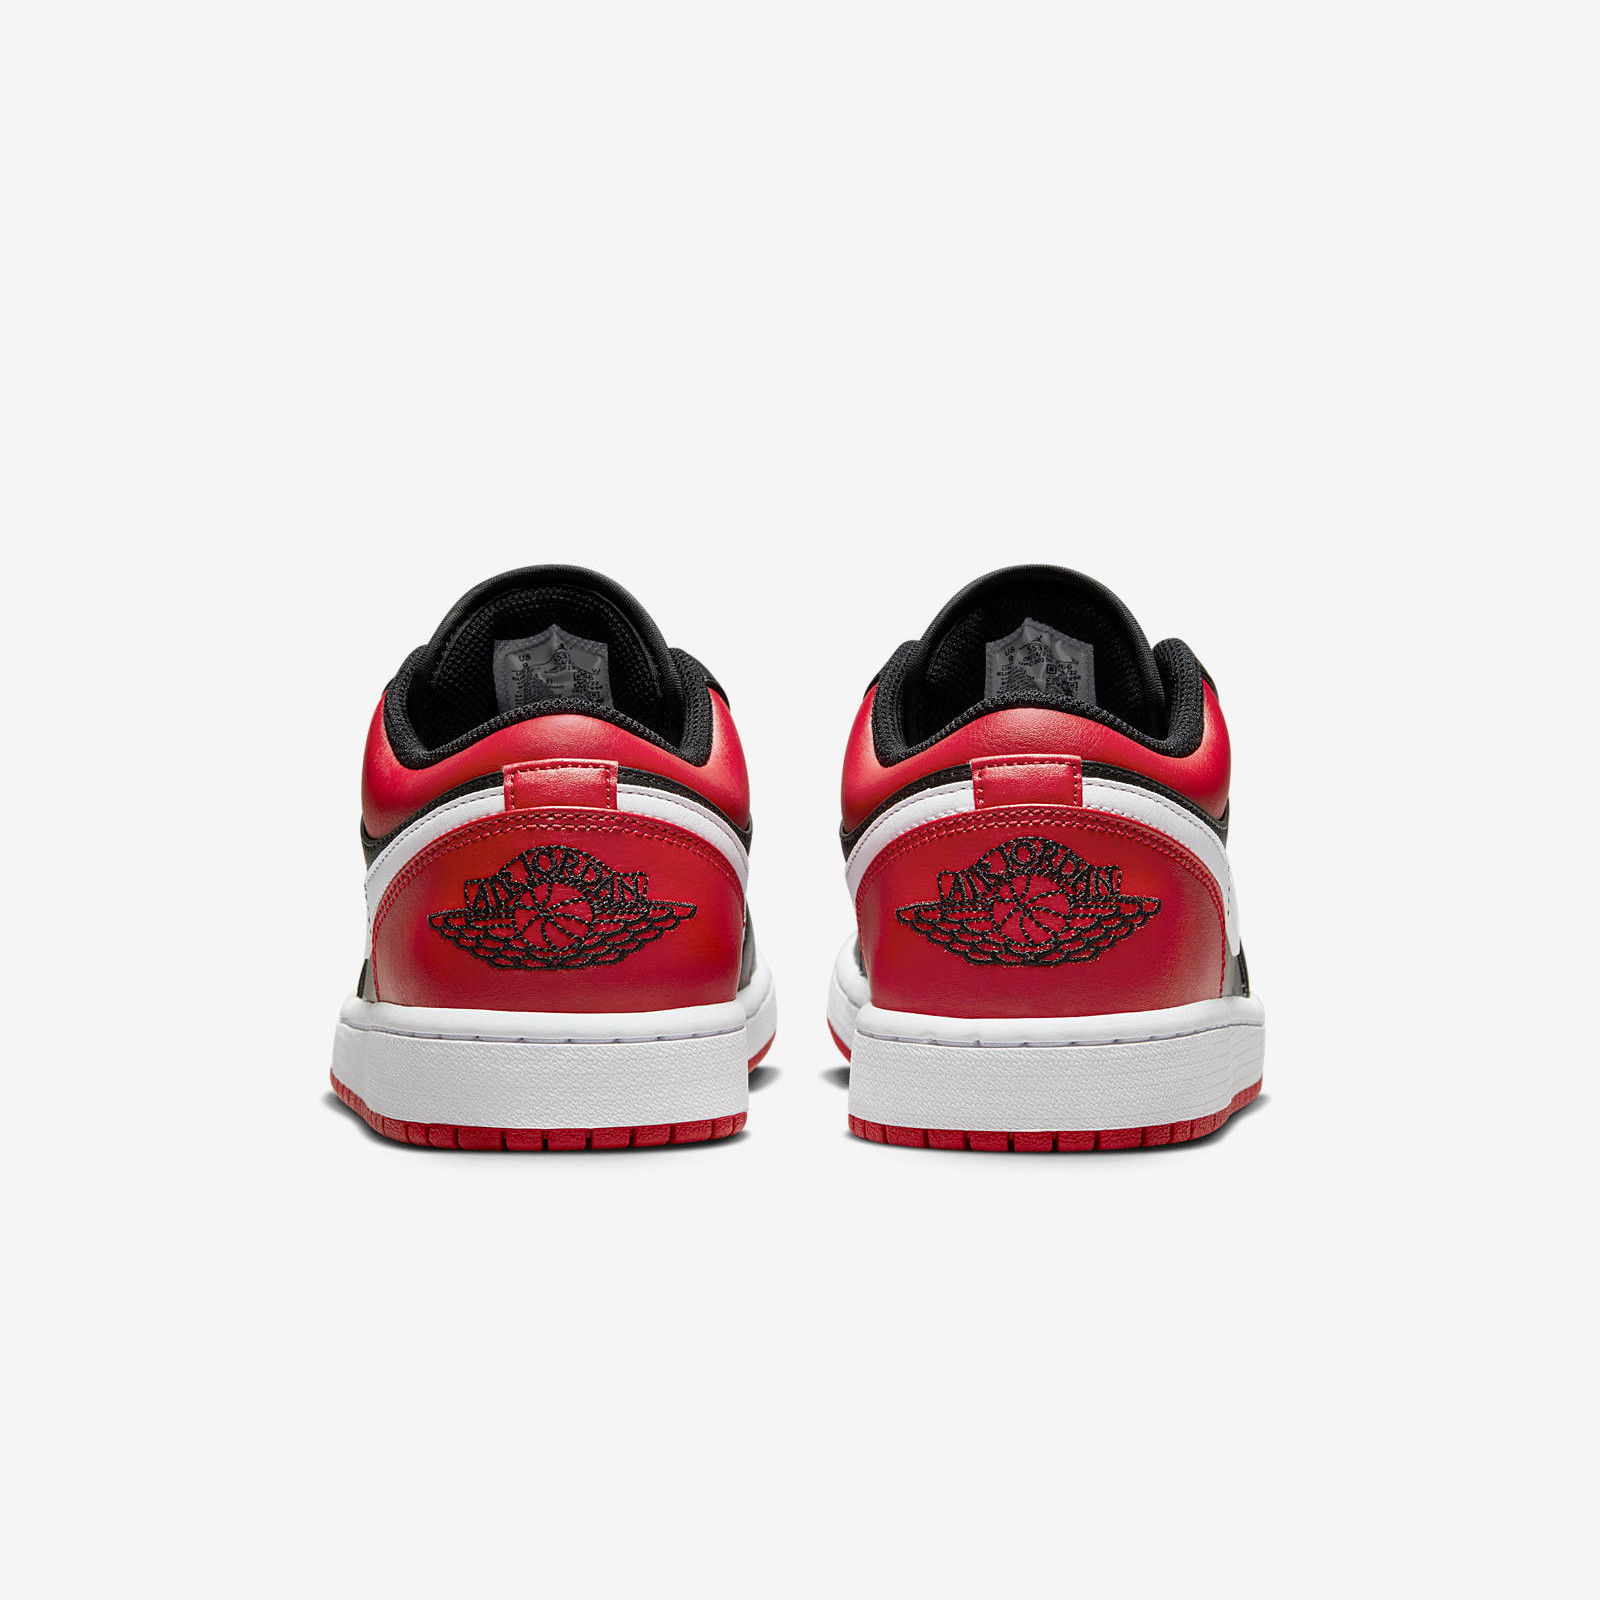 Air Jordan 1 Low
Black / Gym Red